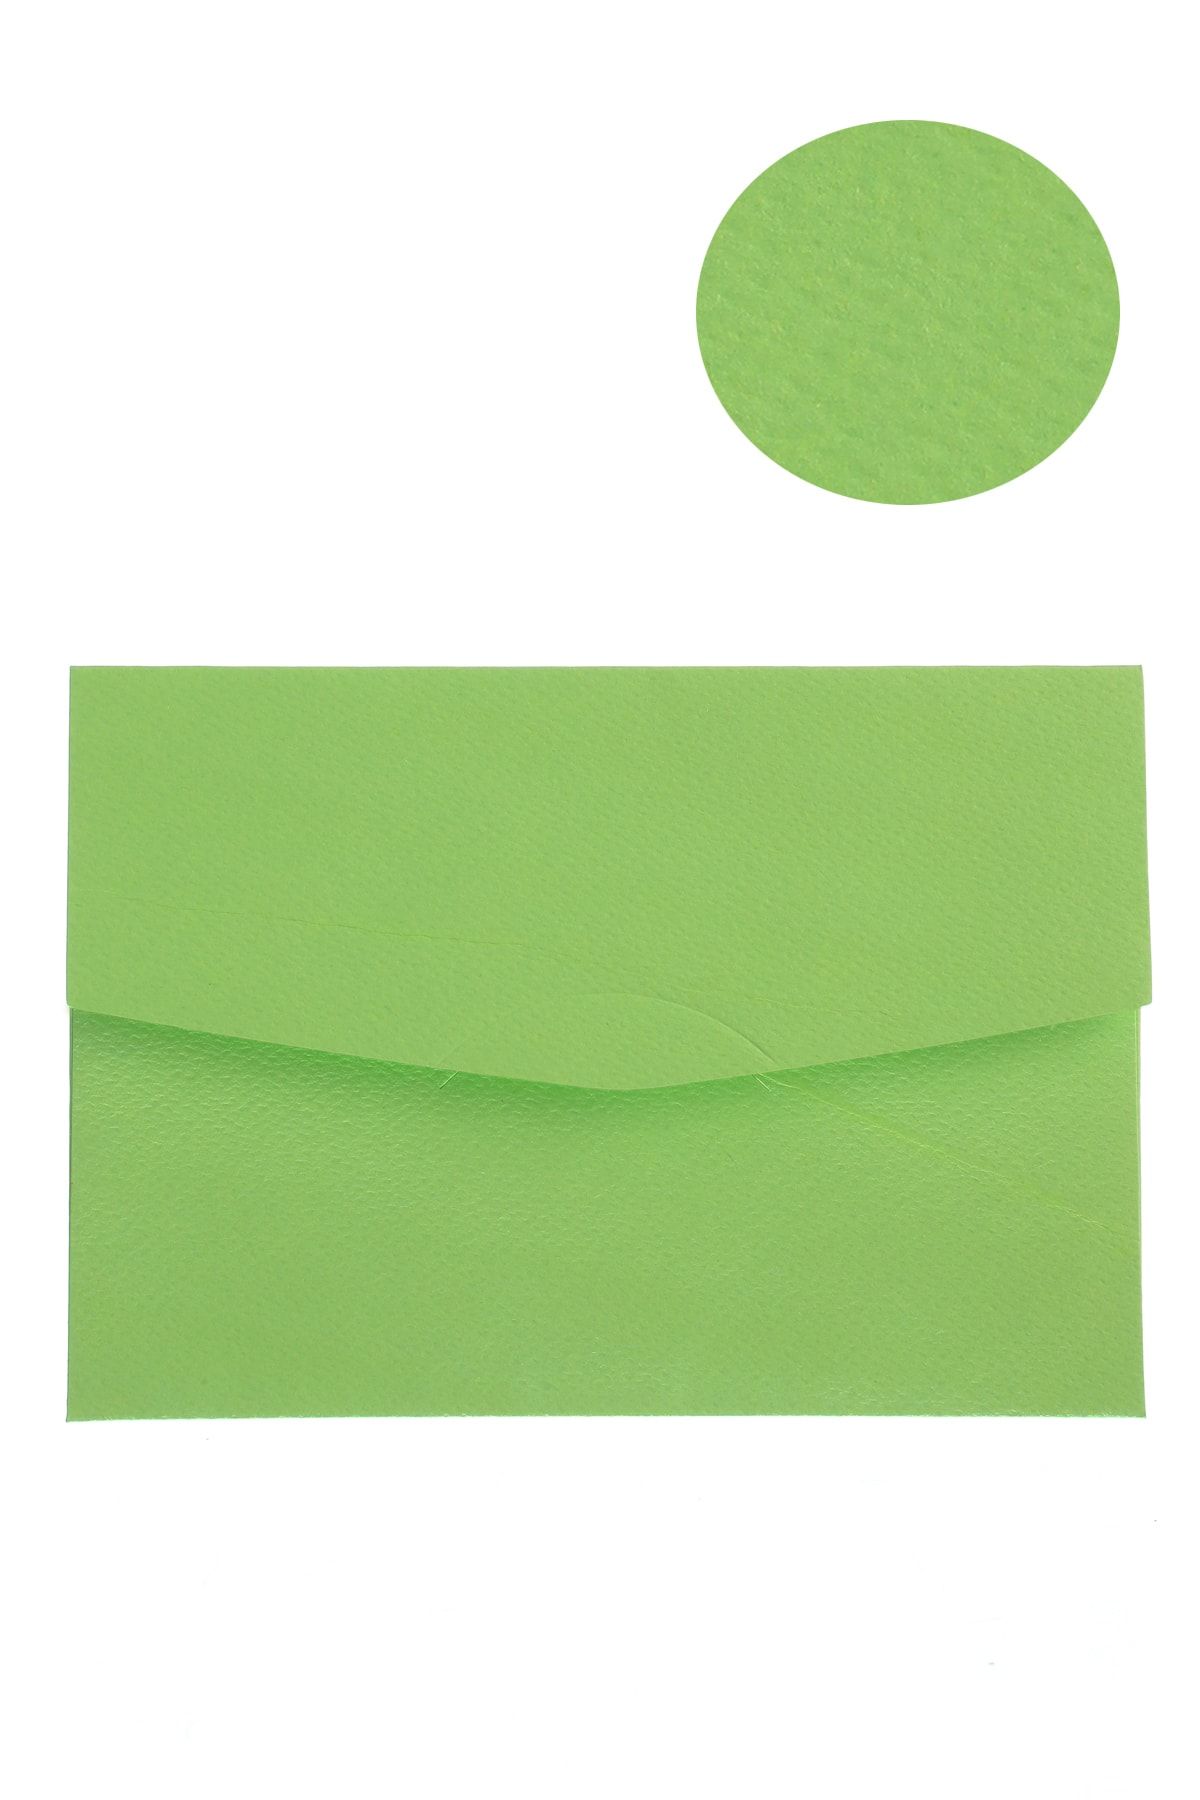 Vox Art Ithal Dokulu Davetiye Zarfı 14x20cm, 220gr Kalın, F.yeşil 50adet